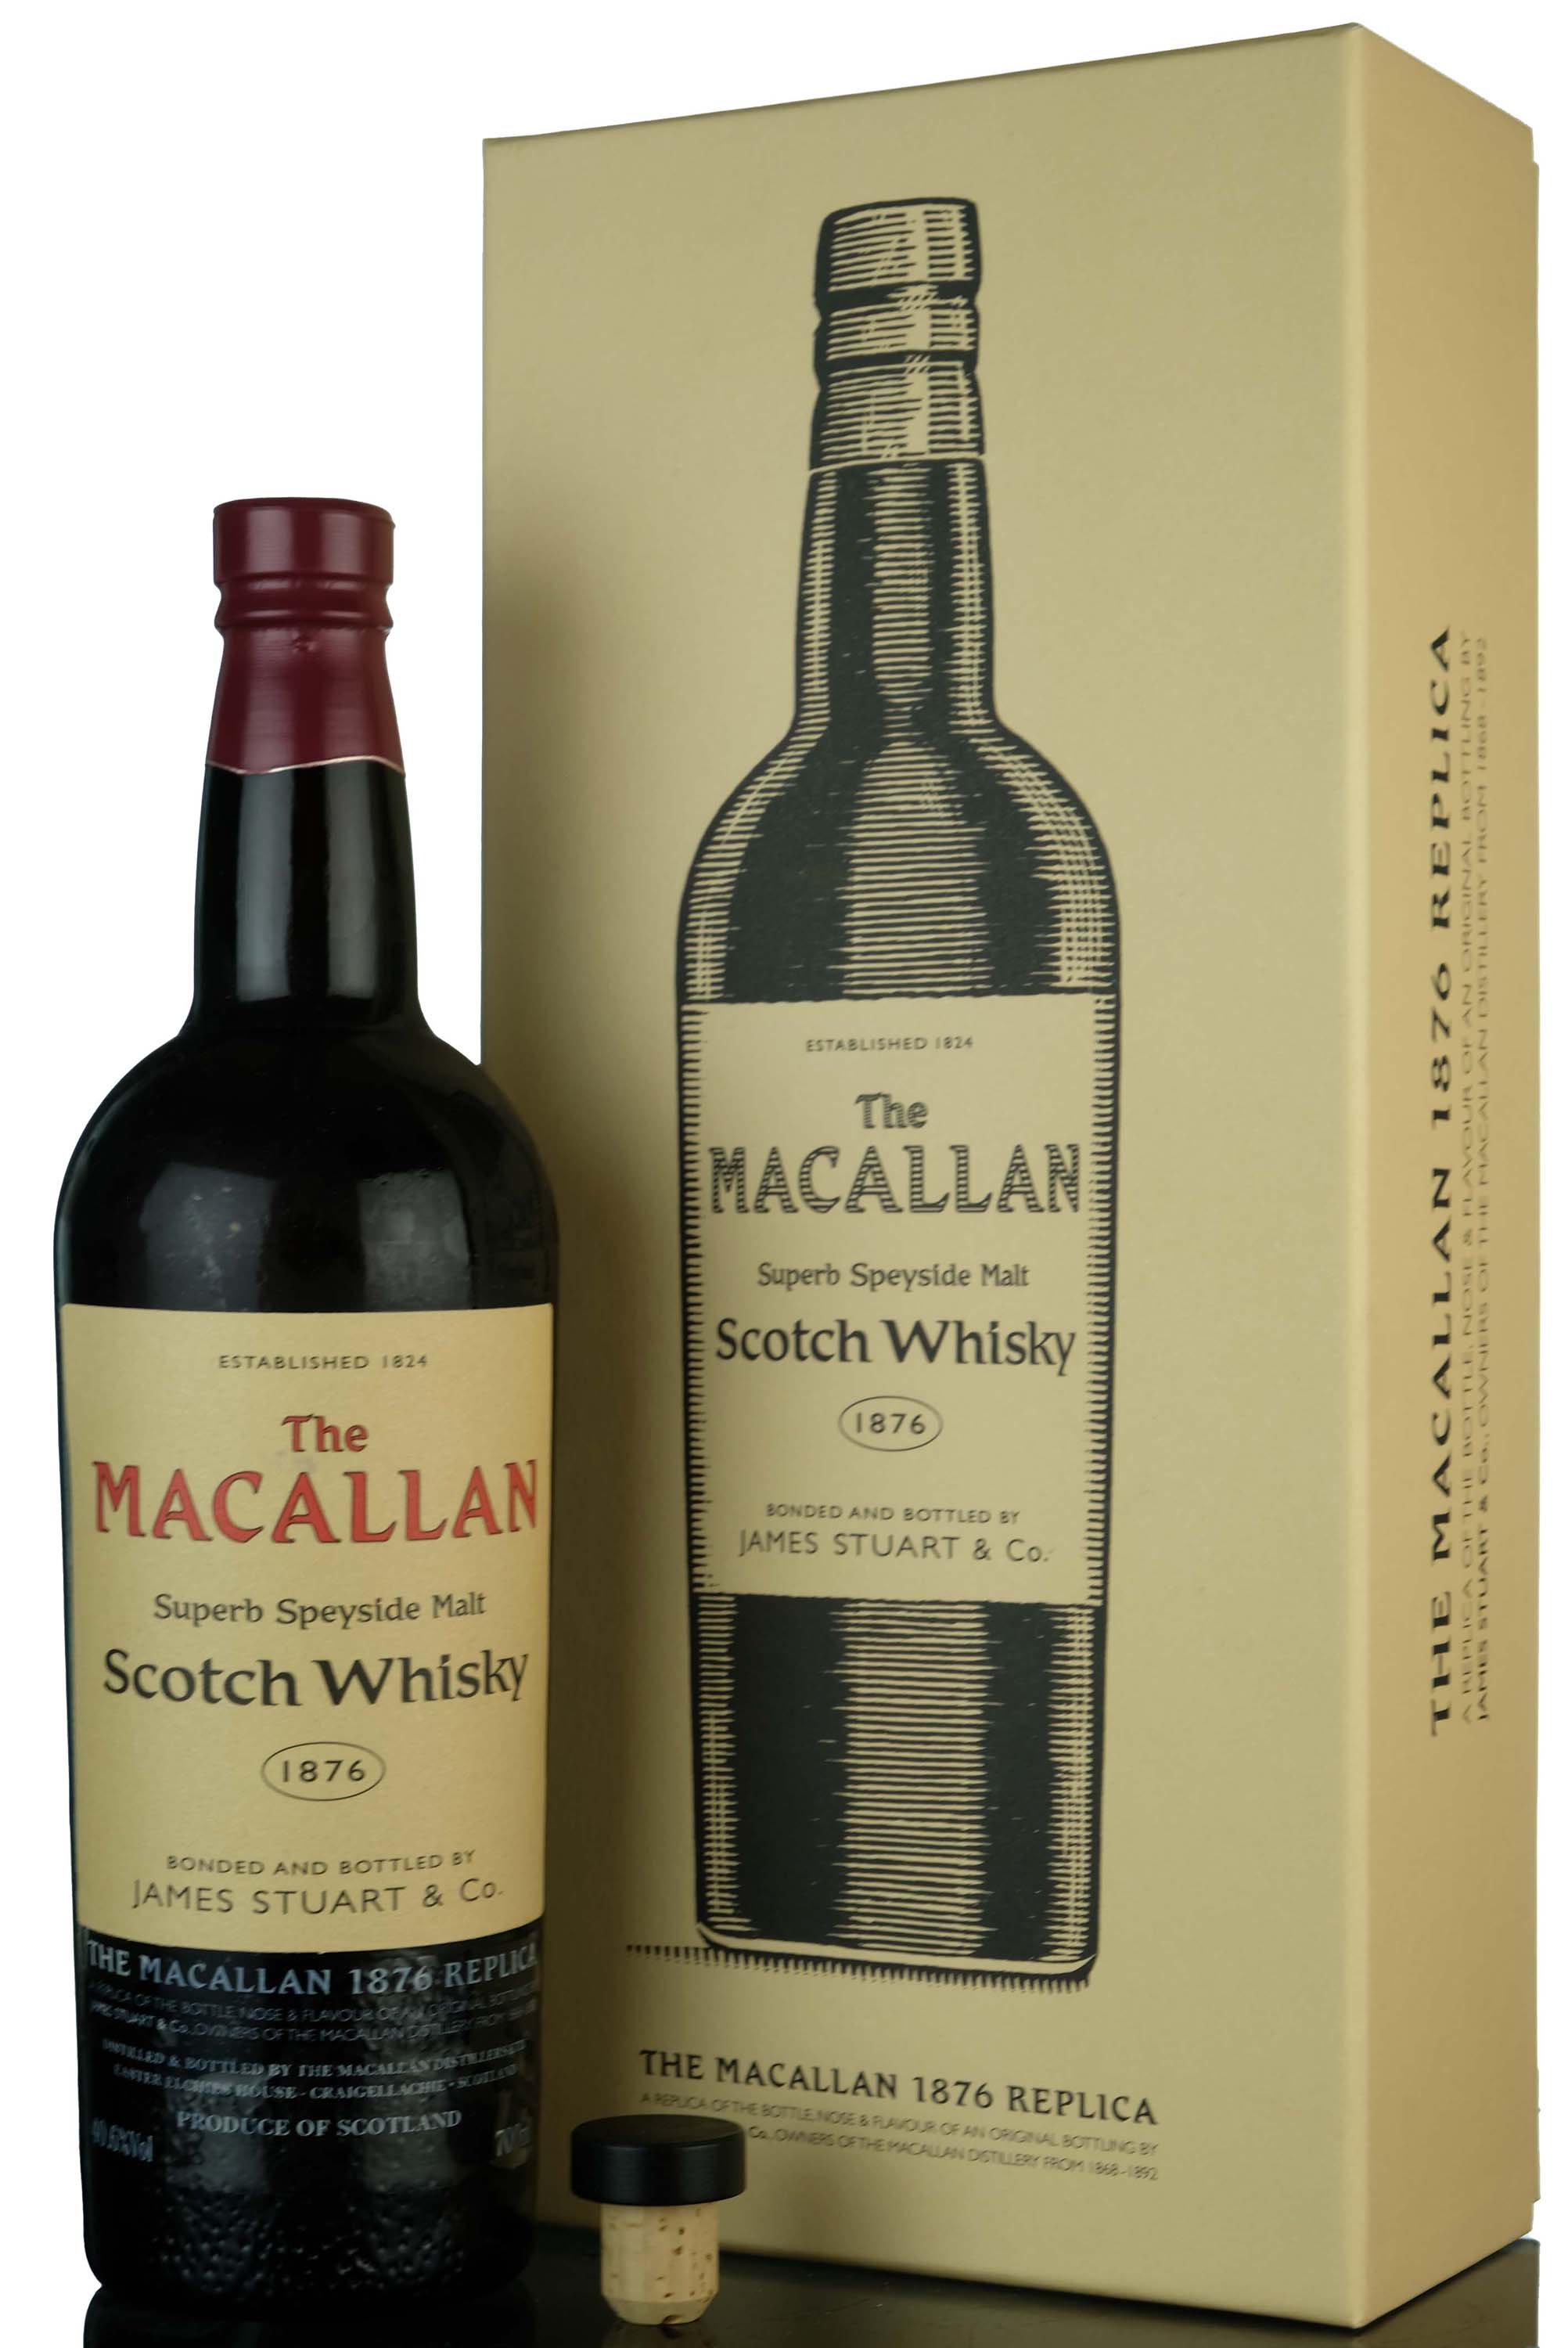 Macallan 1876 Replica - 2003 Release